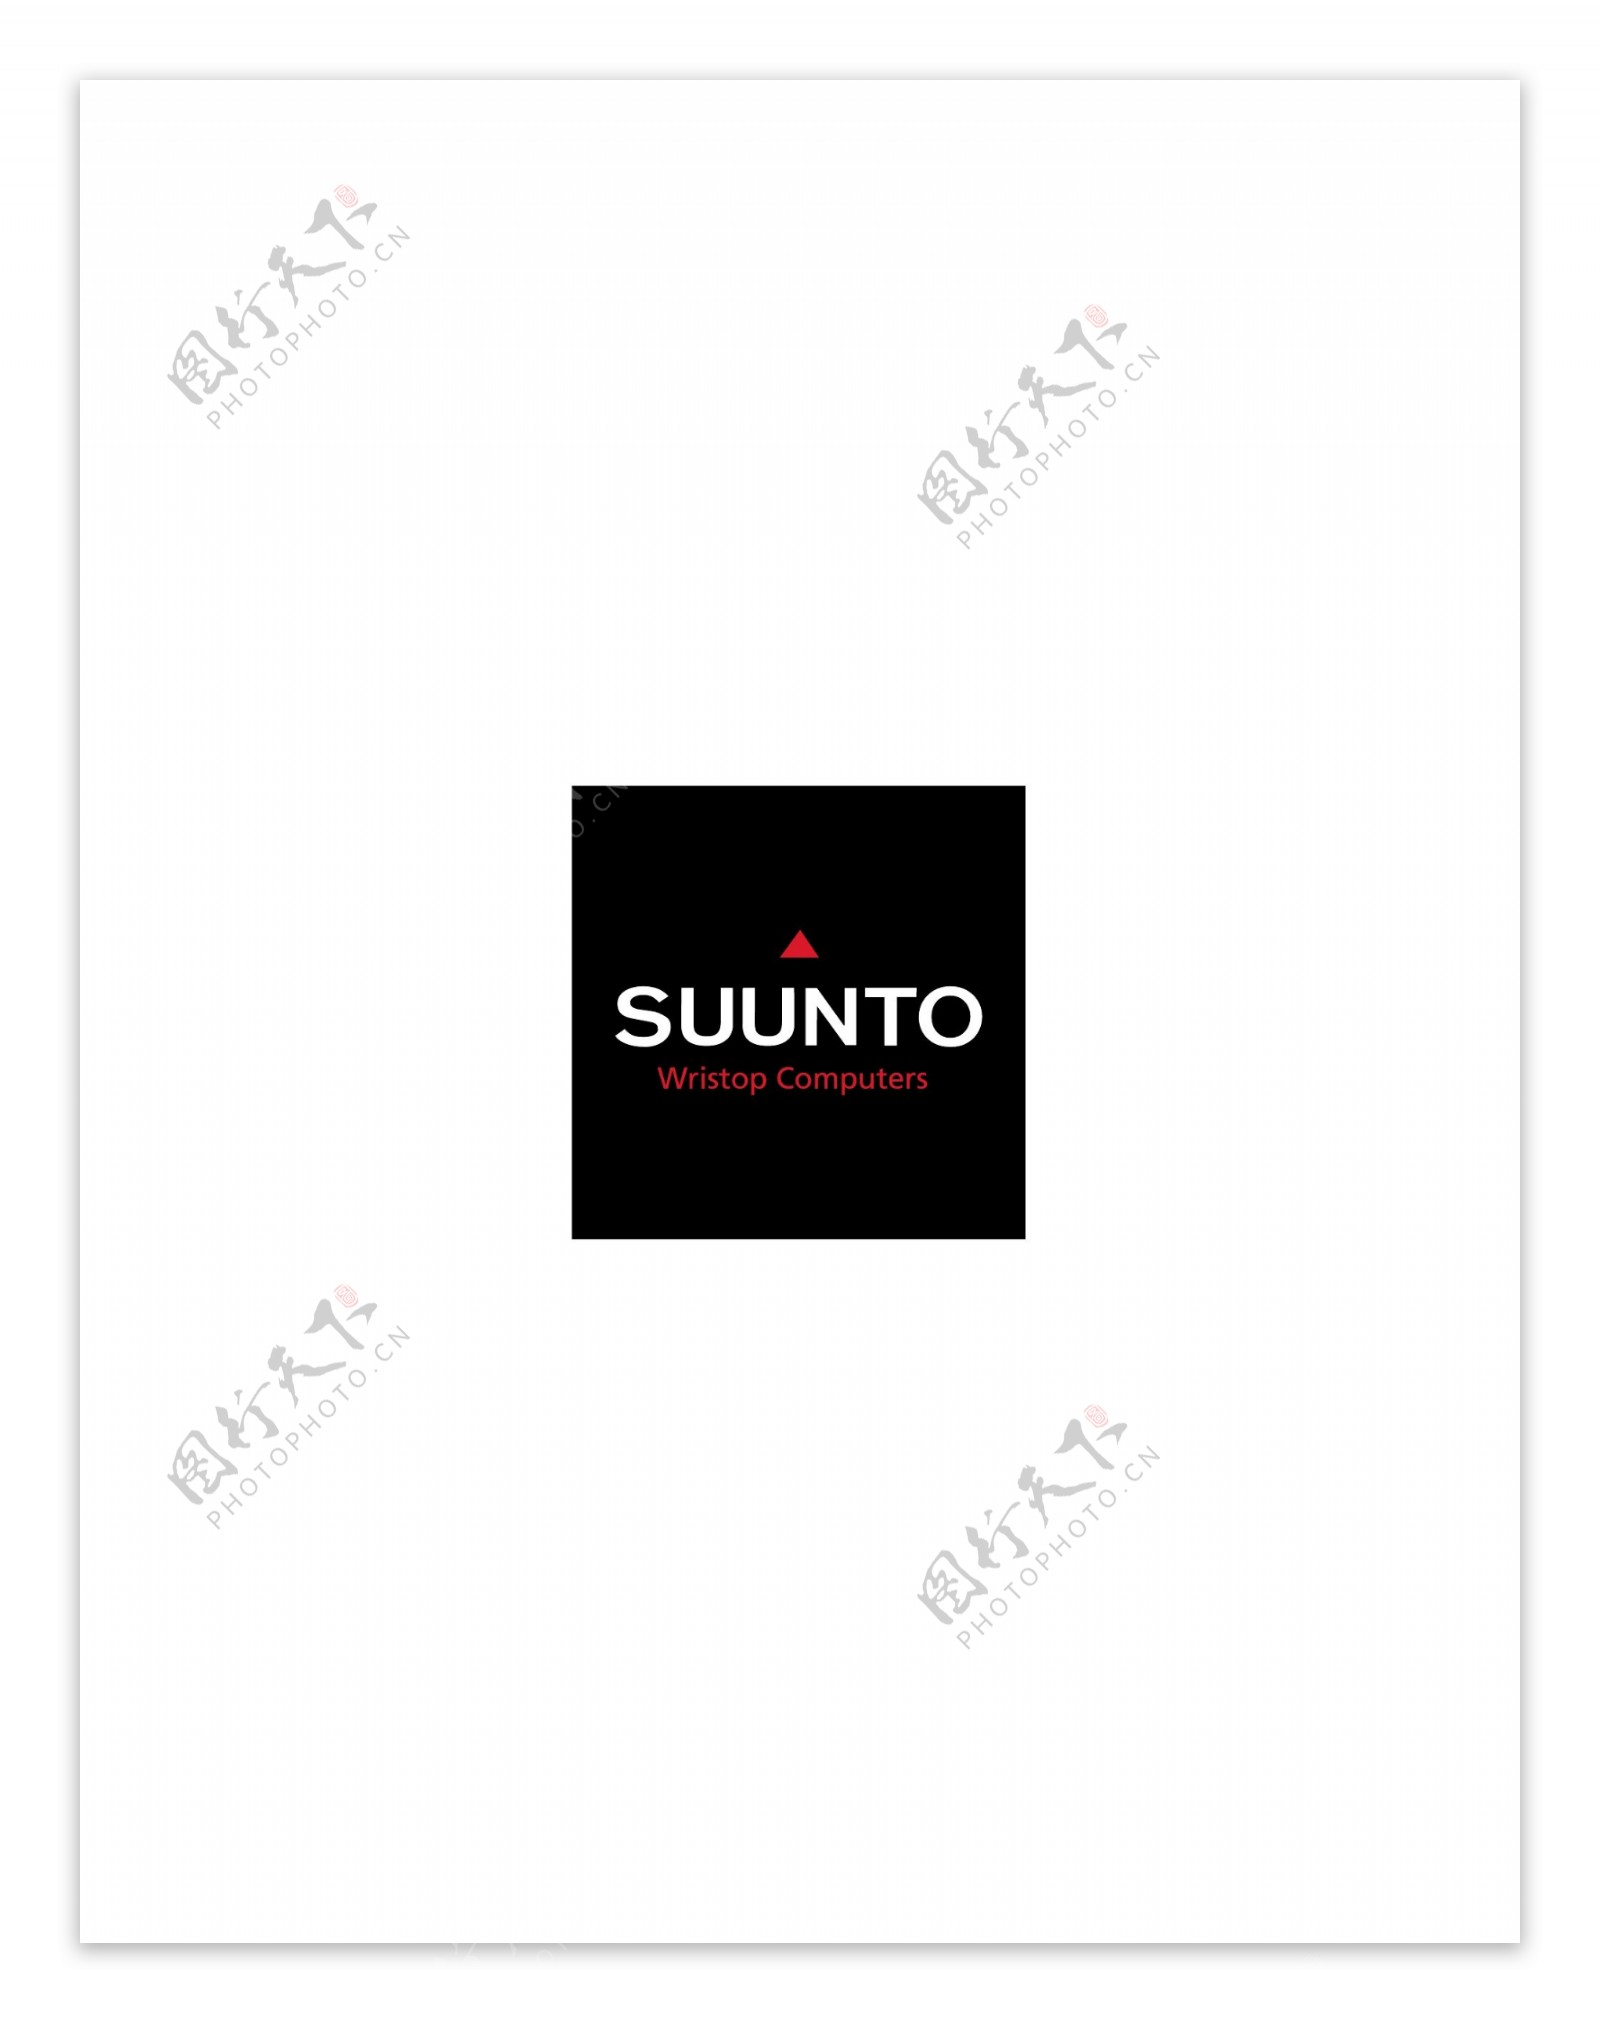 Suuntologo设计欣赏Suunto网络公司LOGO下载标志设计欣赏